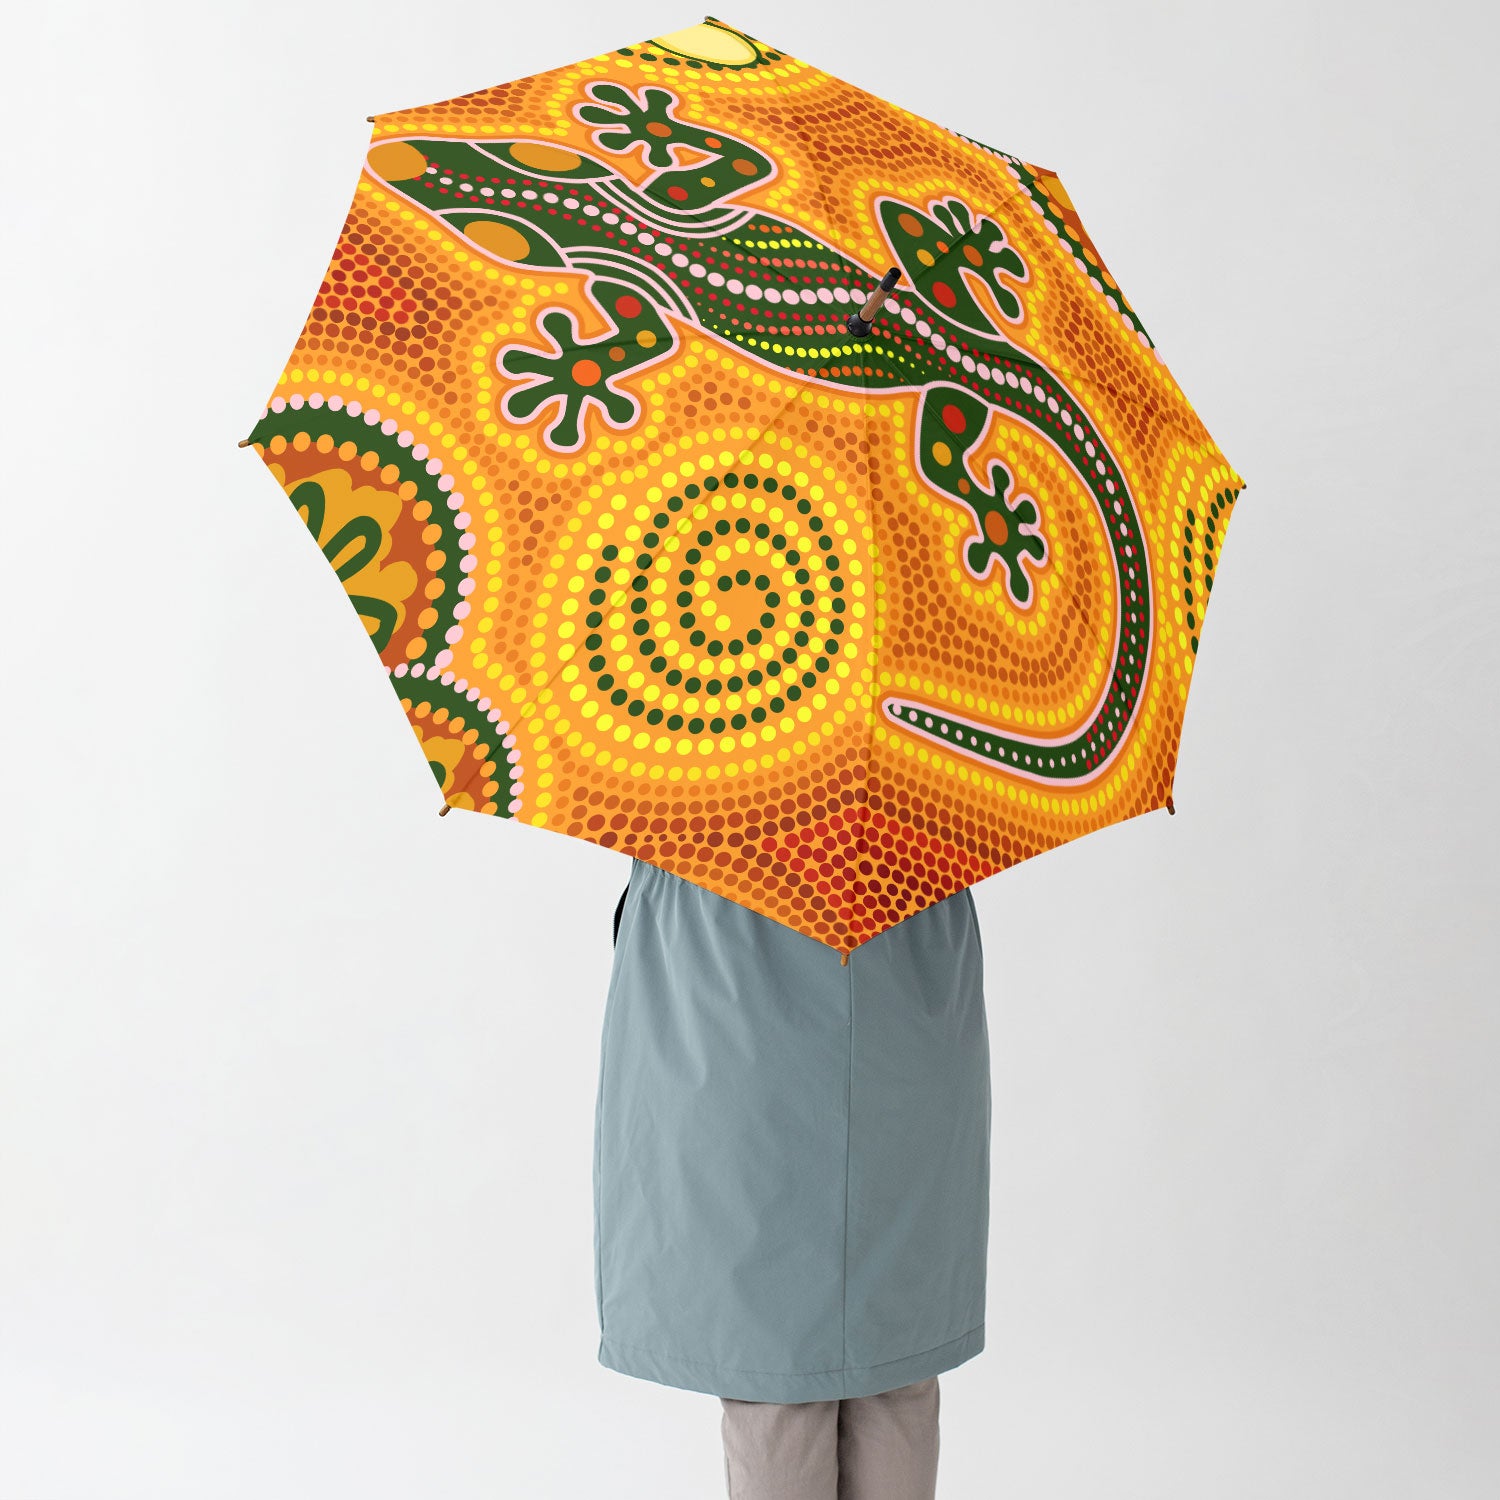 Australia    Aboriginal  Umbrella Aboriginal Inspired dot art background with lizard   Umbrella